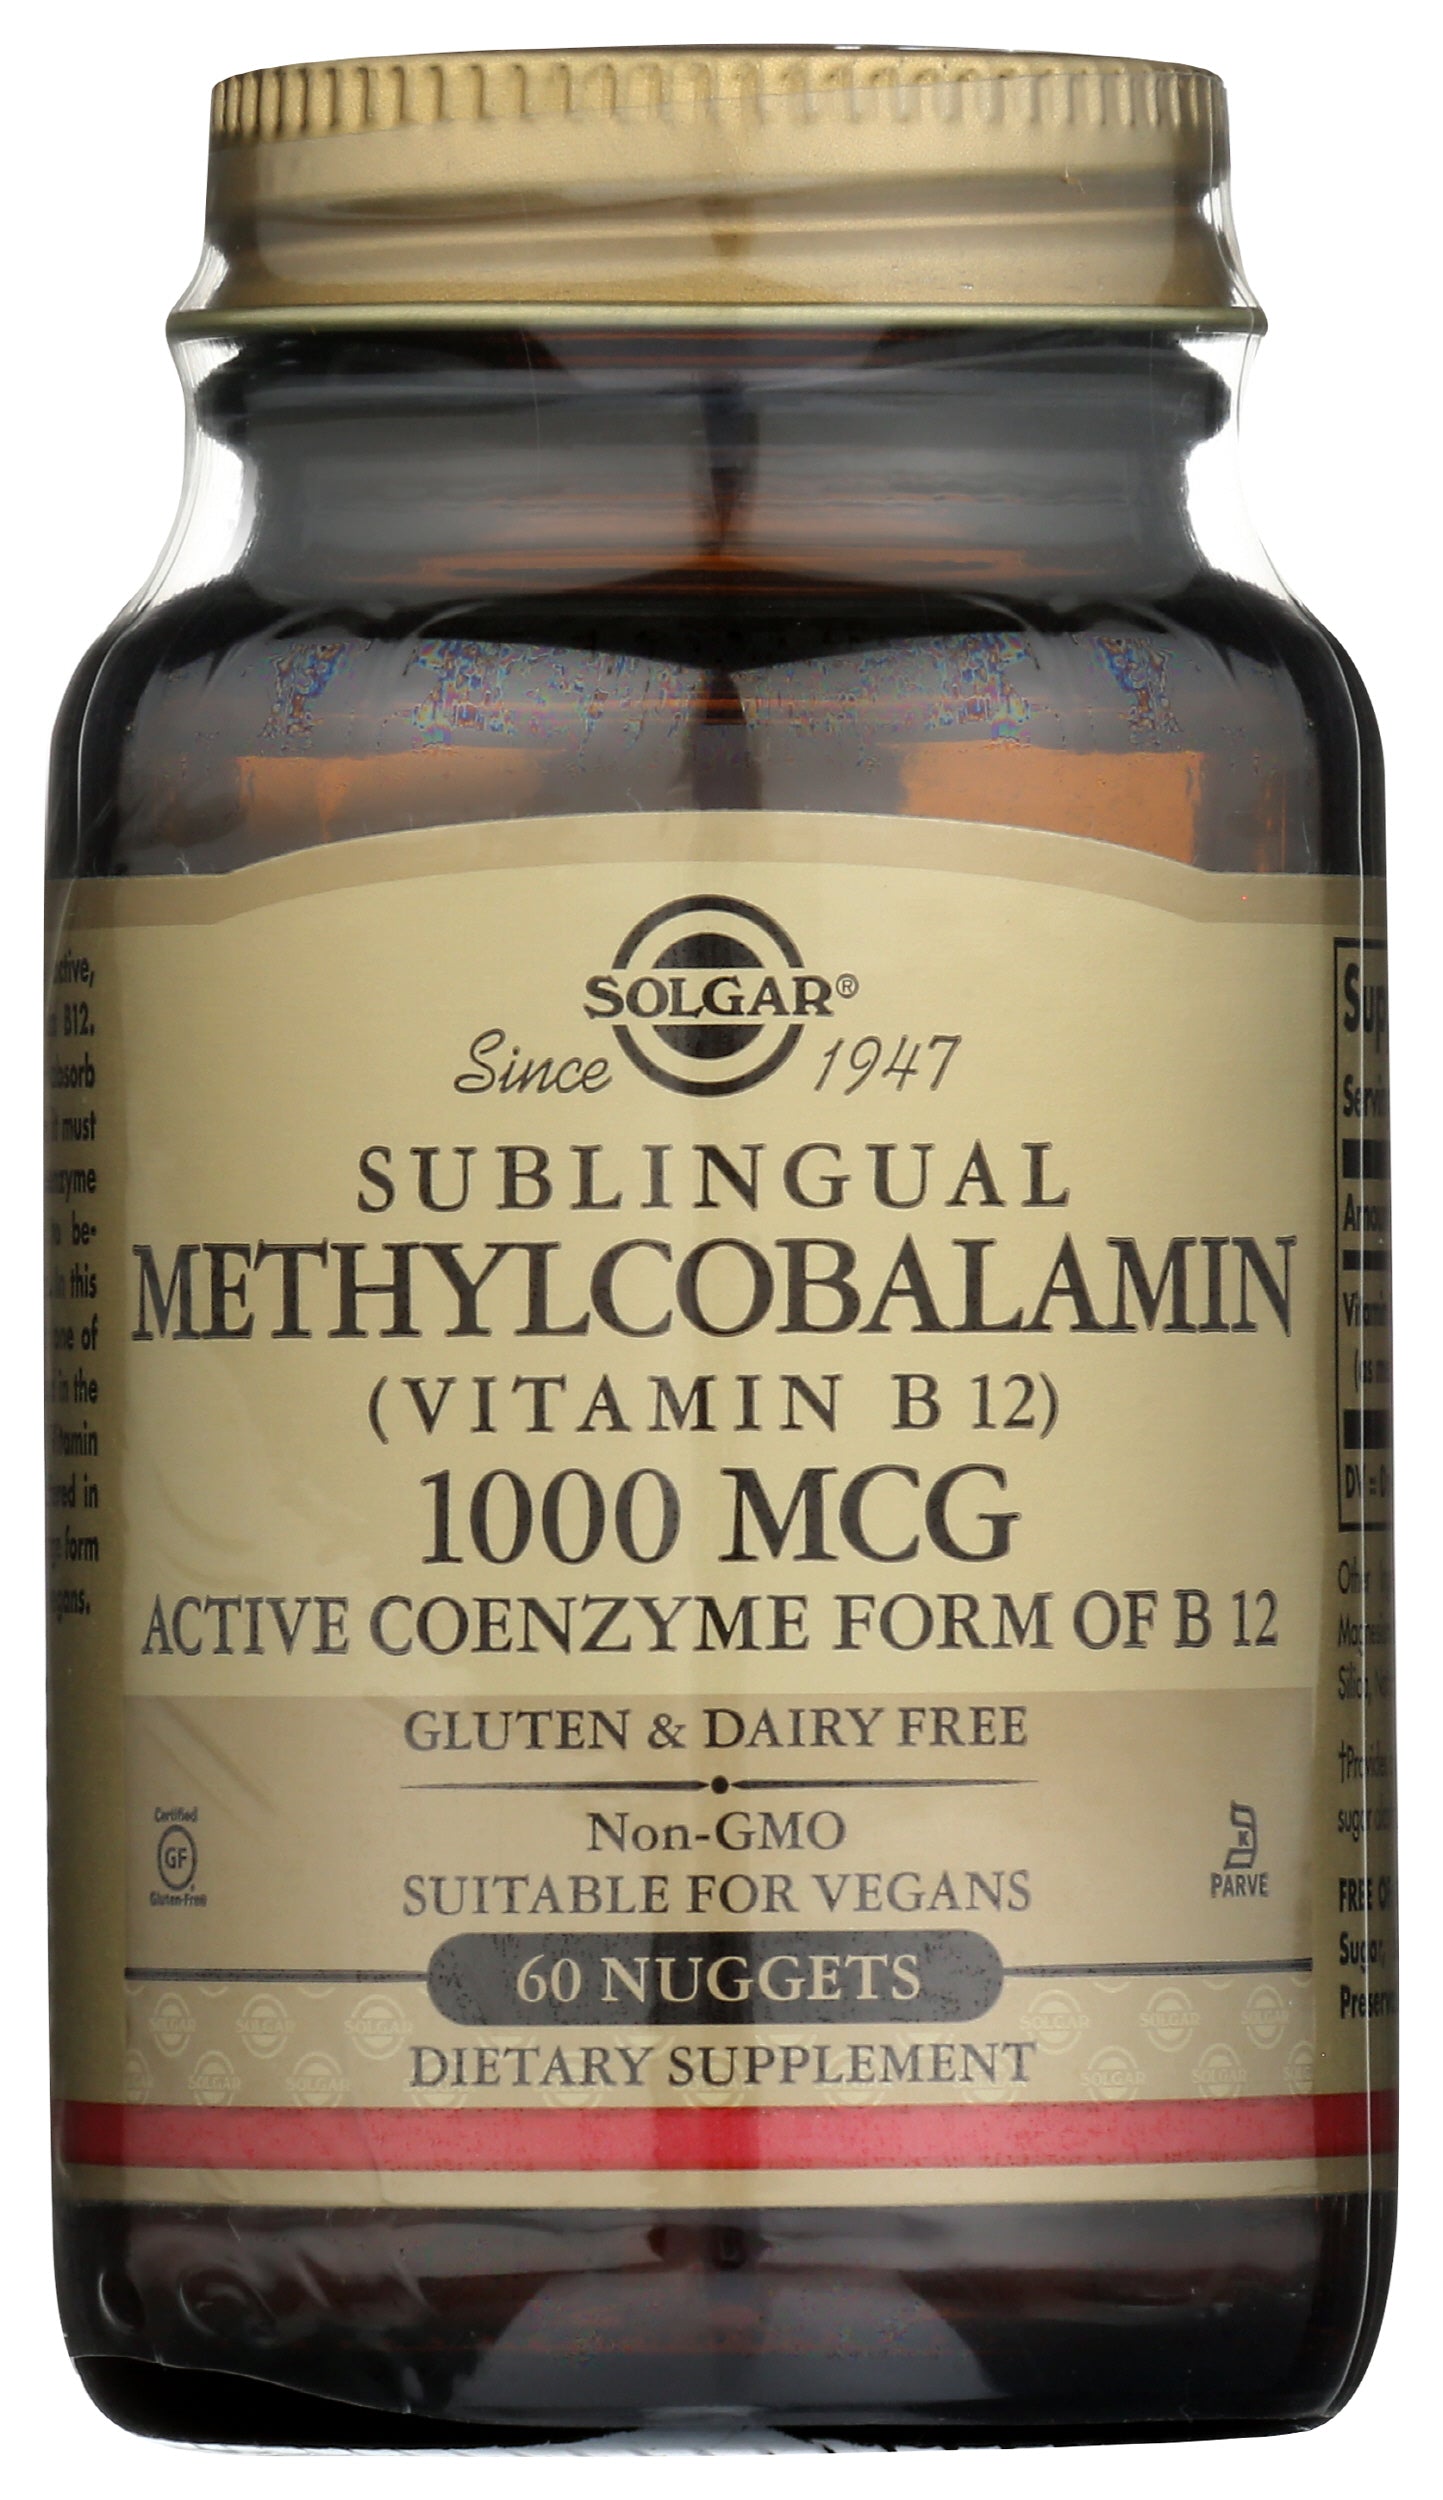 Solgar Methylcobalamin Vitamin B12 1000 mcg 60 Nuggets Front of Bottle